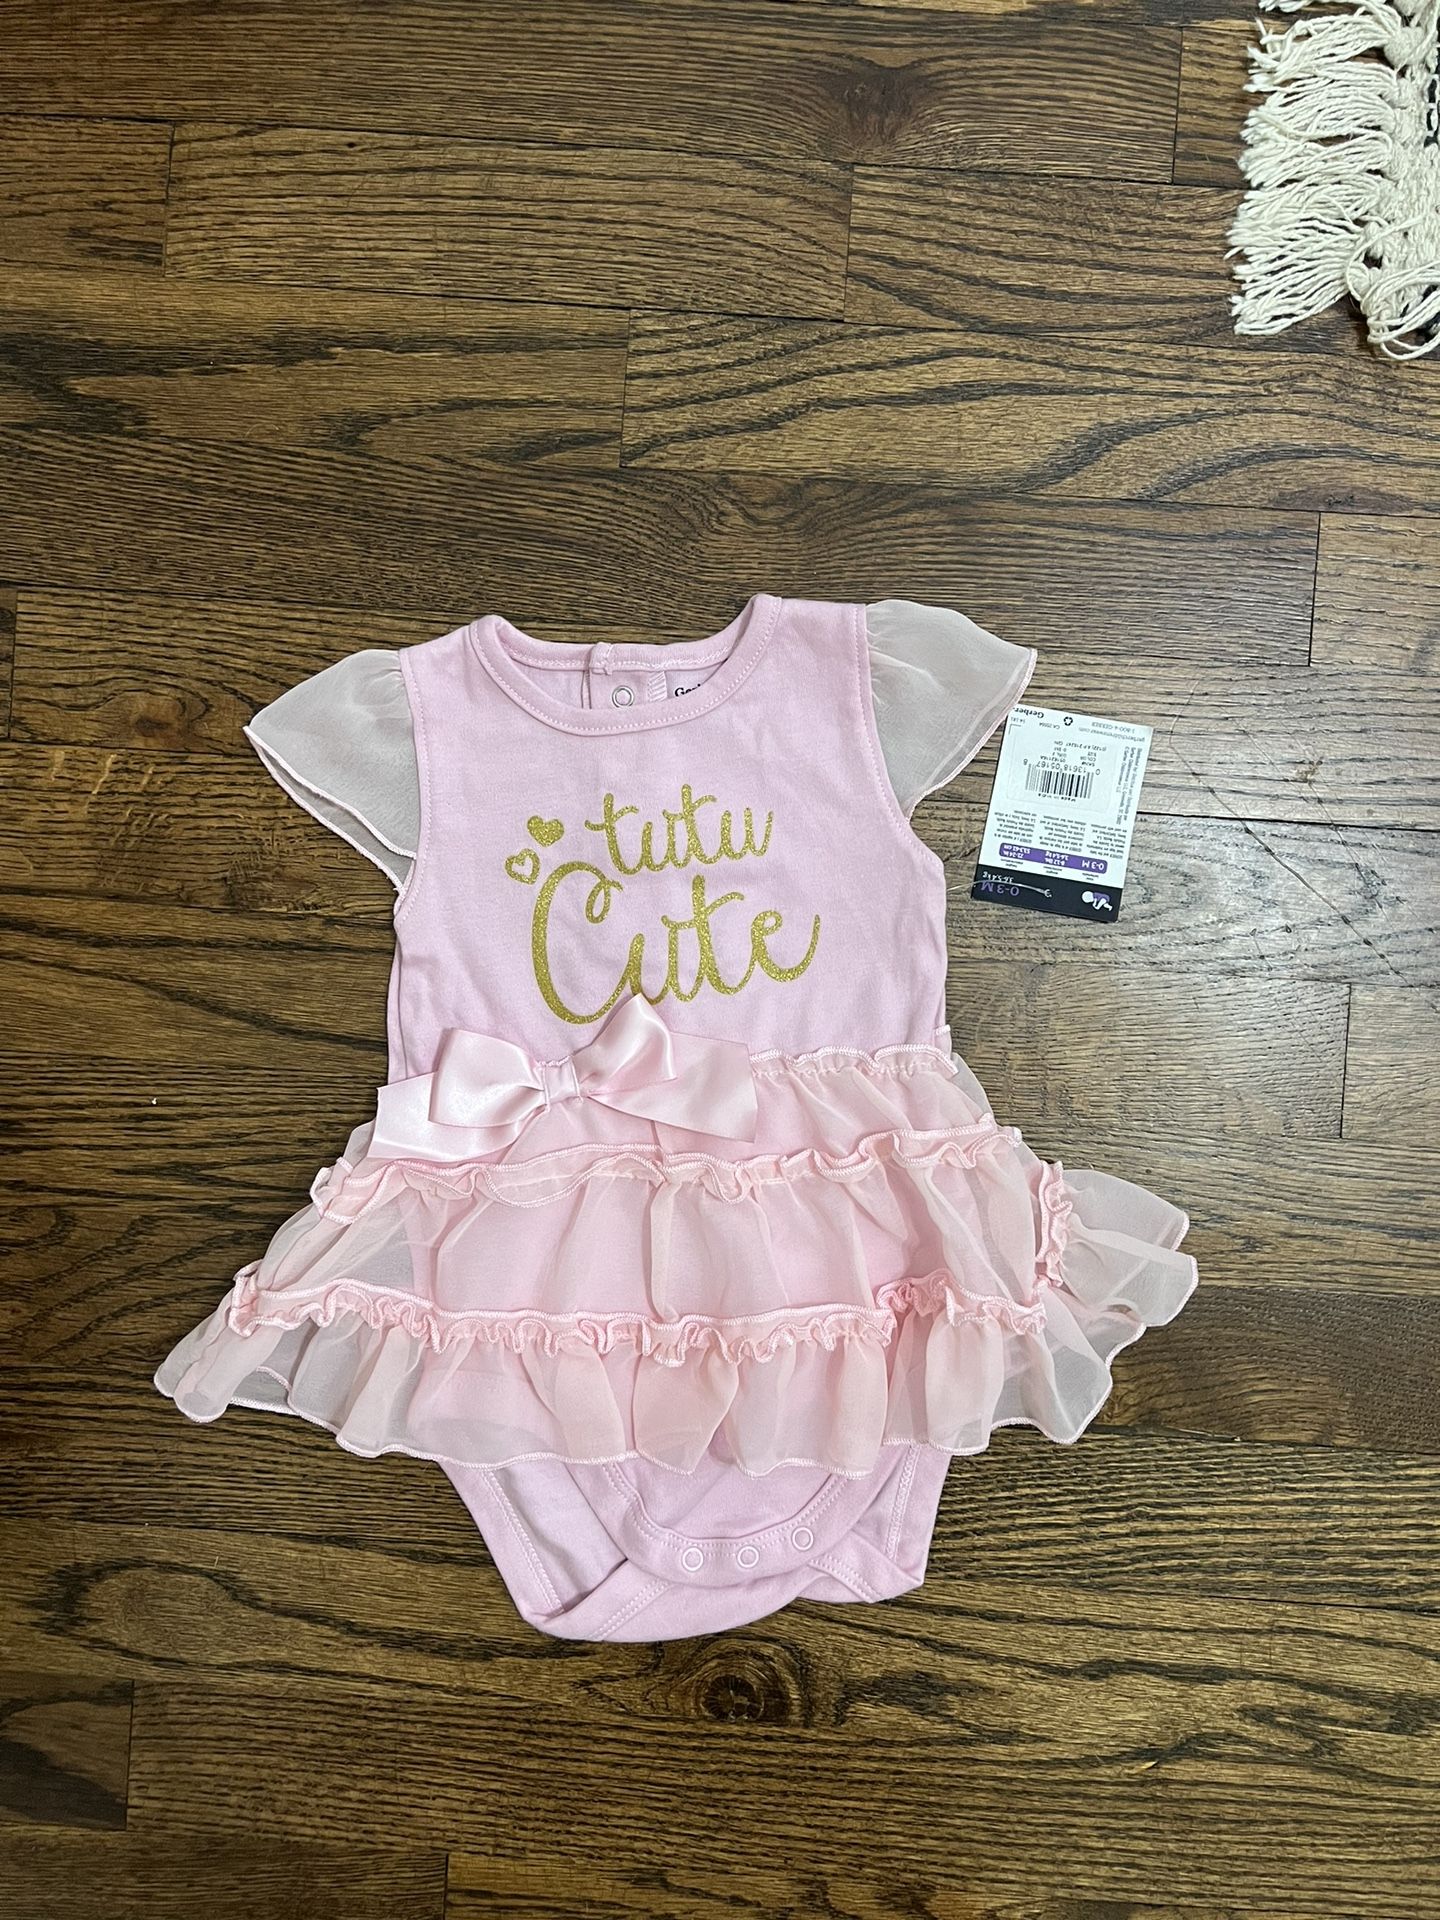 Tutu Cute Baby Outfit